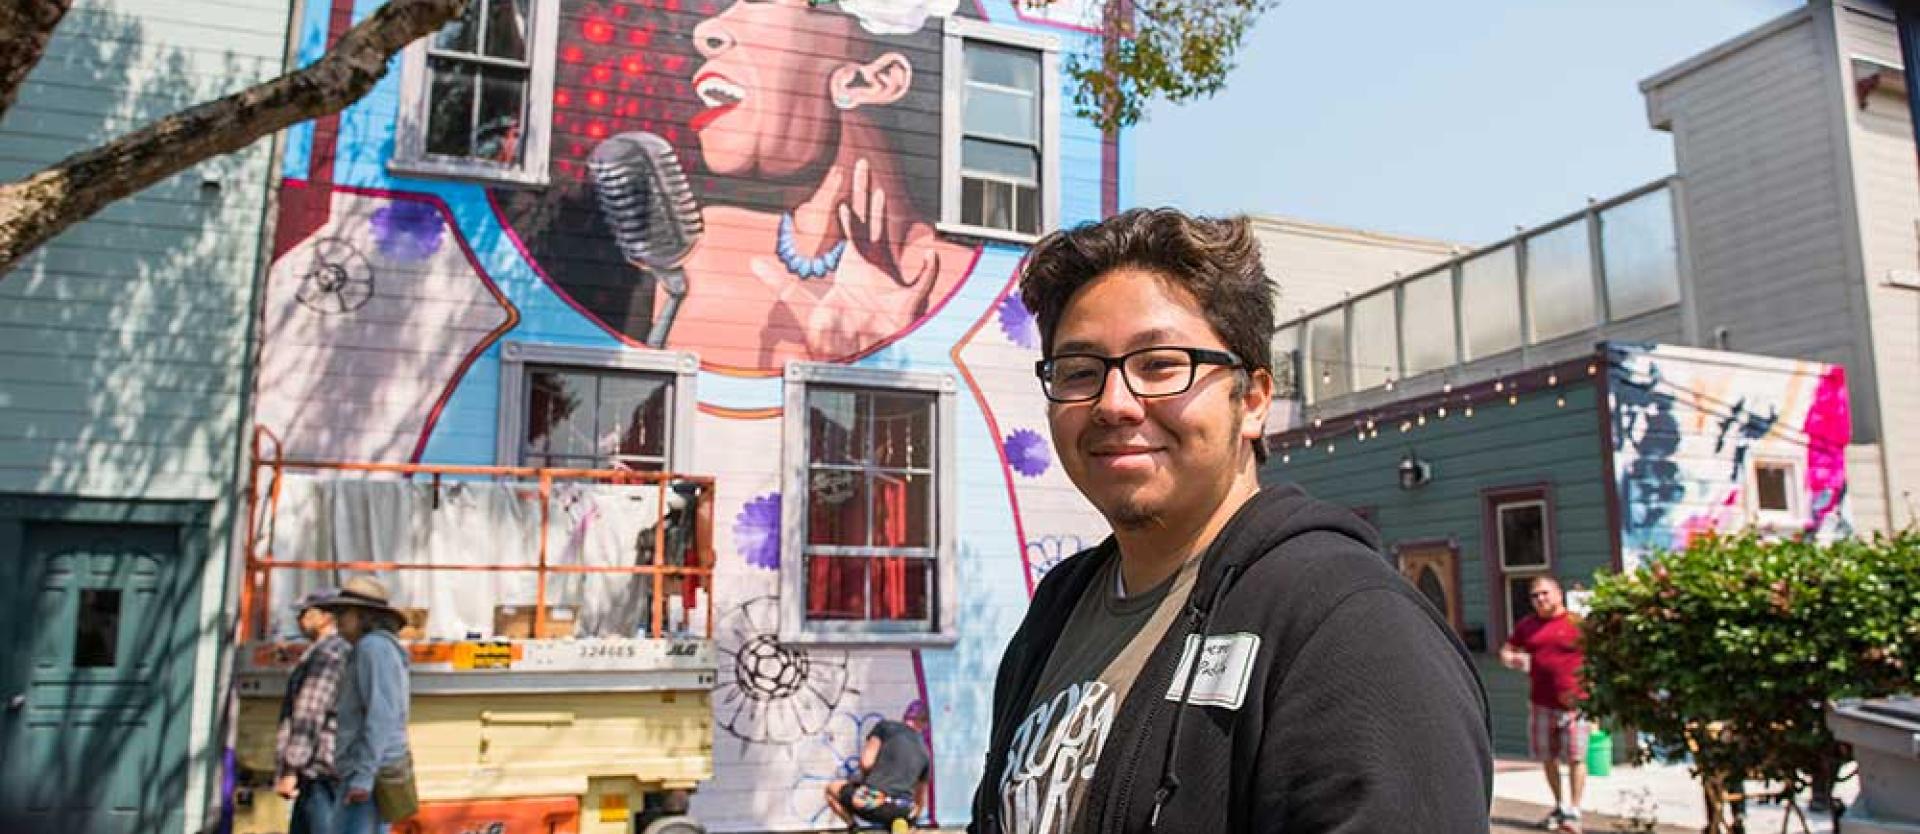 Humboldt students enjoying mural at during the Eureka Street Art Festival